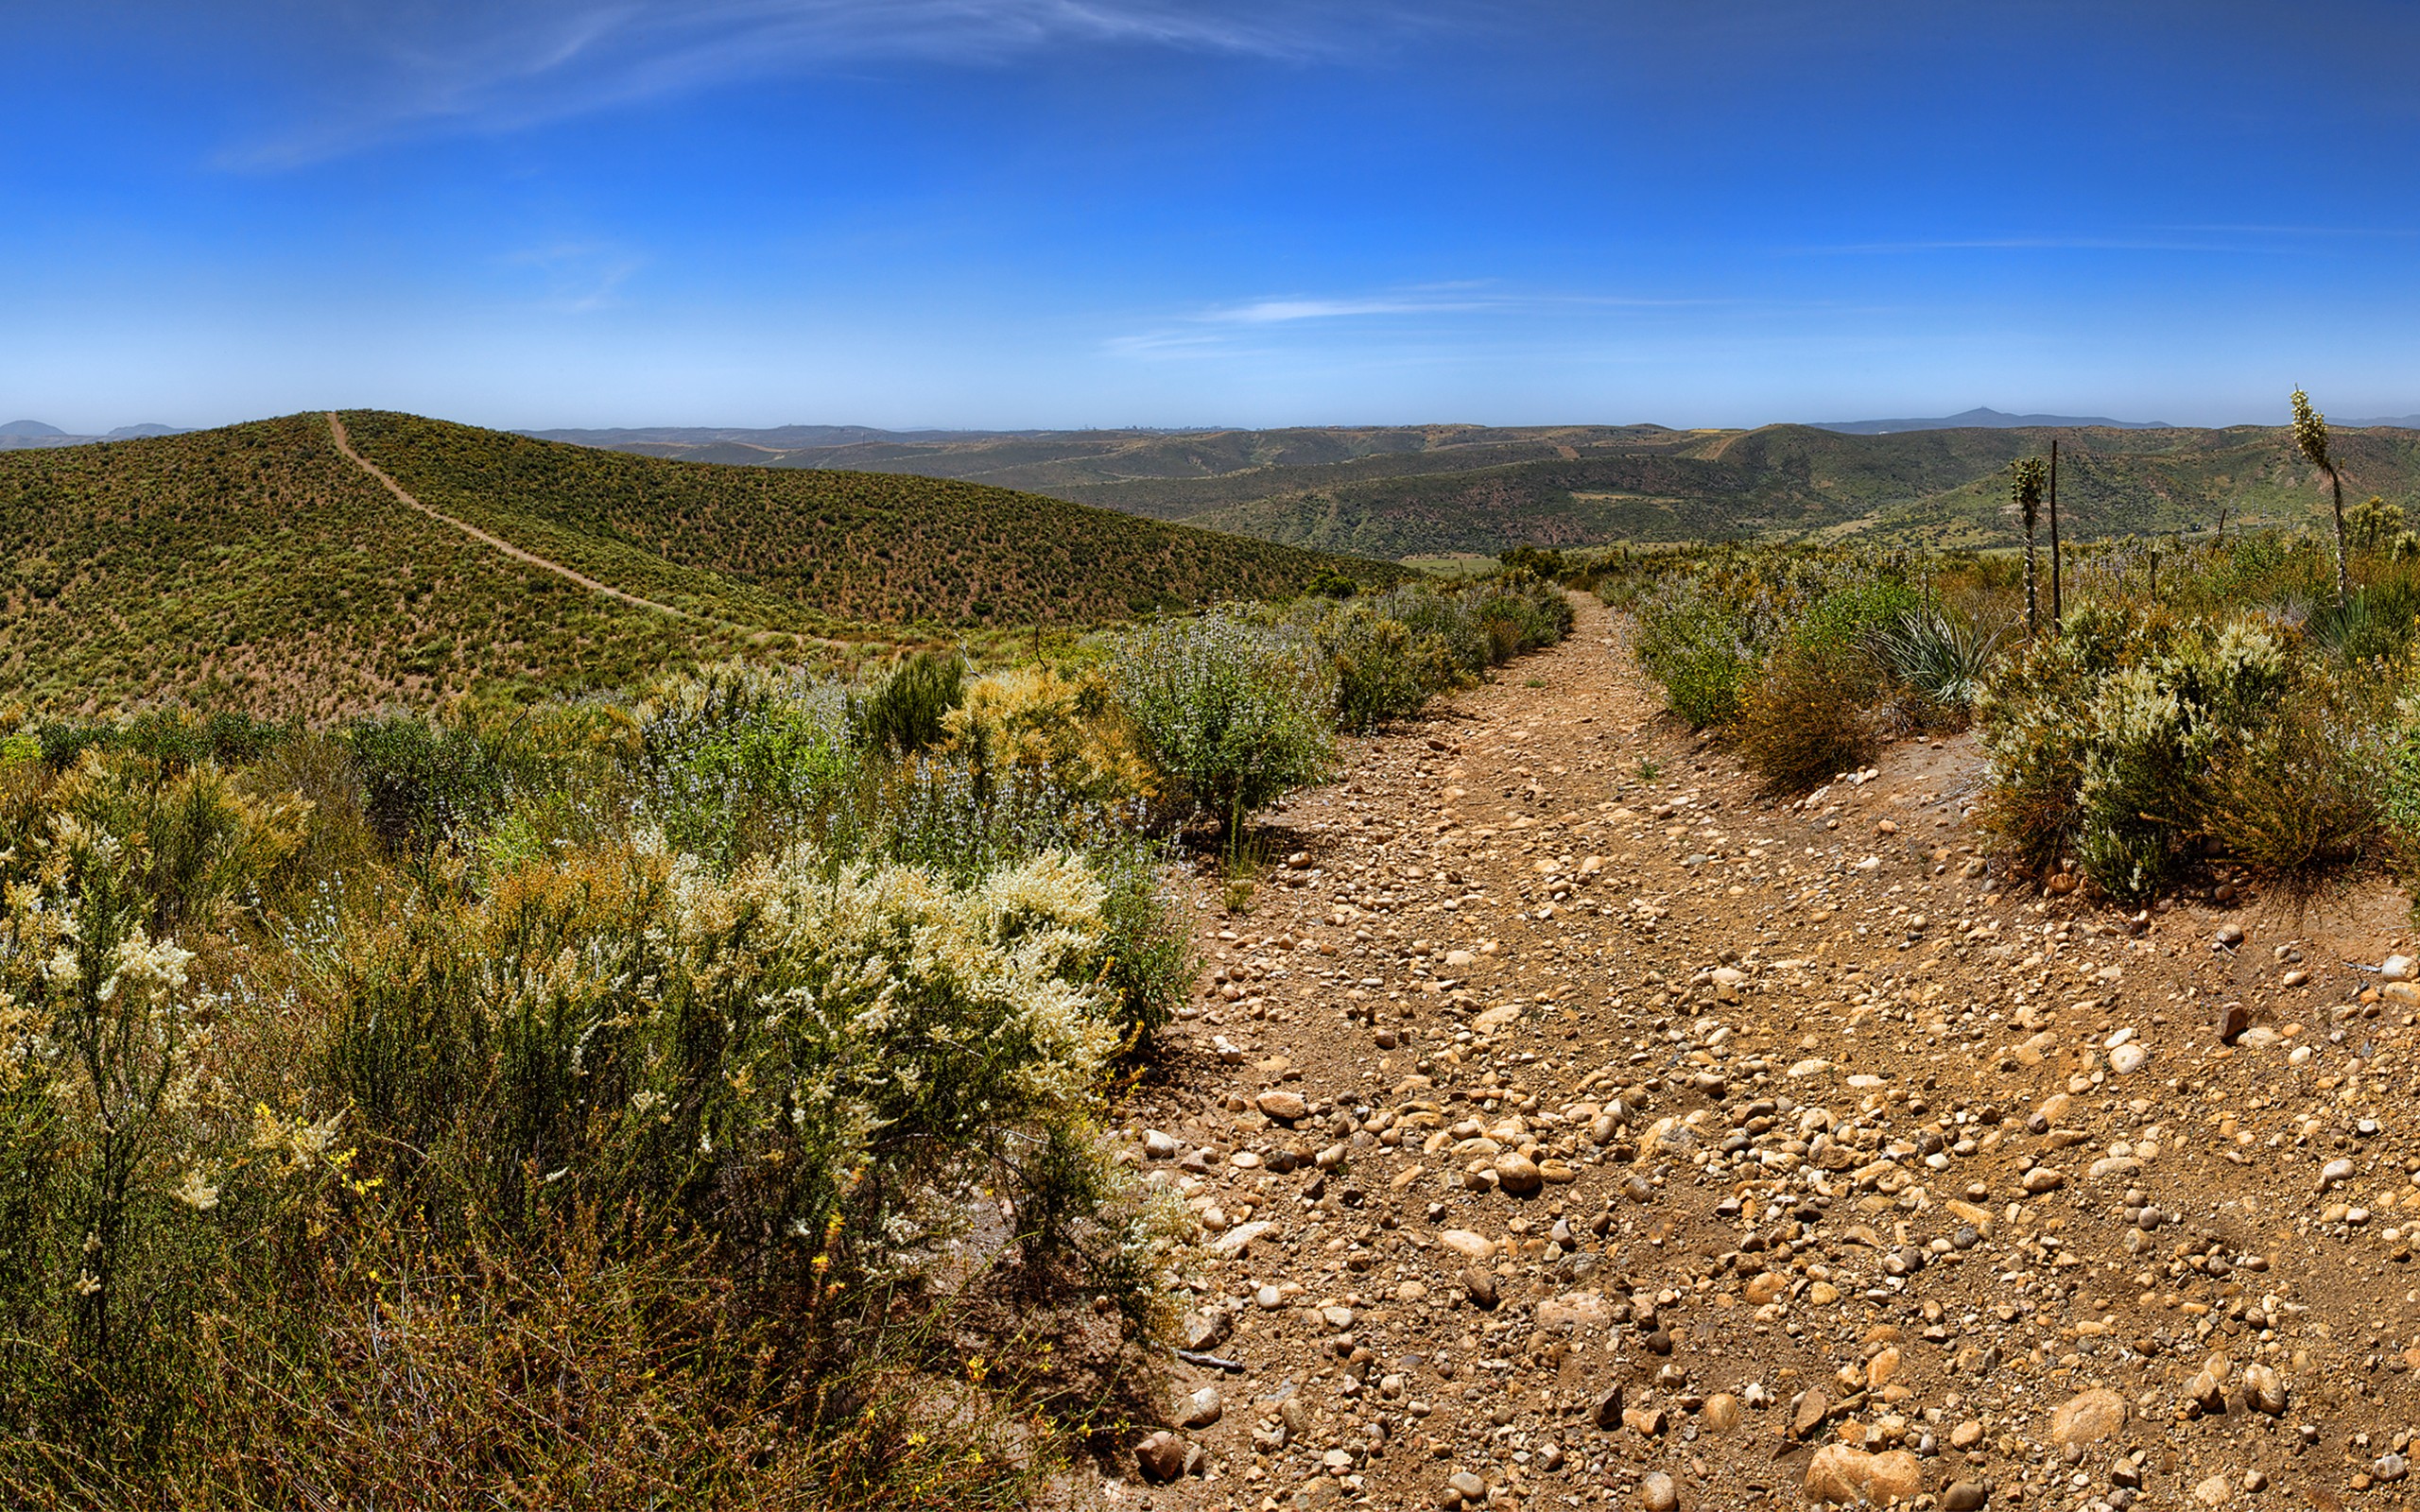 General 2560x1600 landscape desert California national park shrubs dirt road nature USA